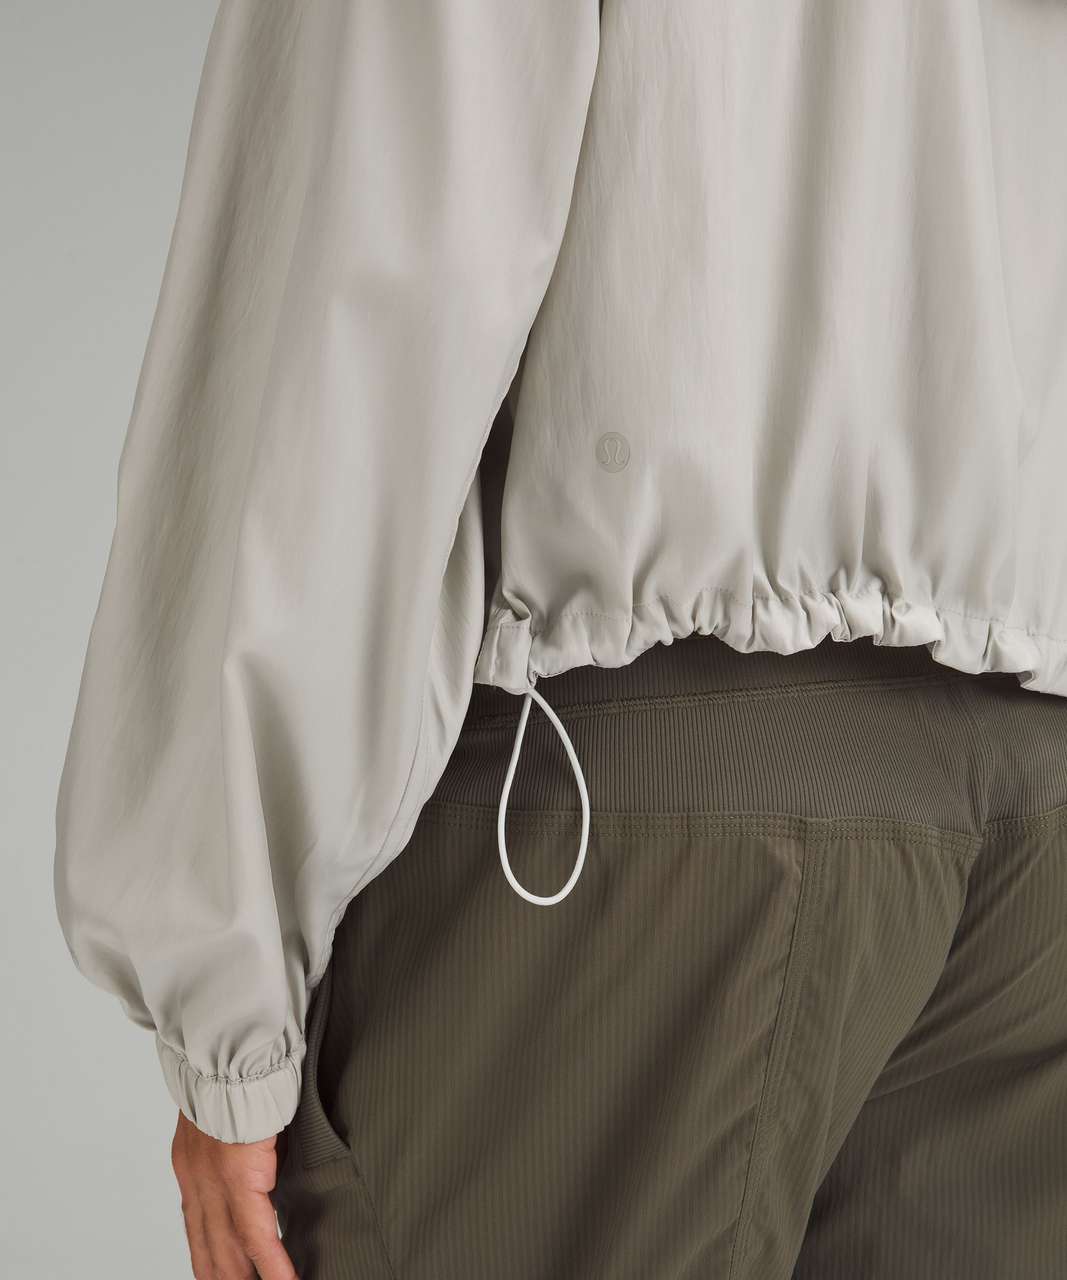 Lululemon Reversible Drape-Sleeve Jacket - Bone / Raw Linen